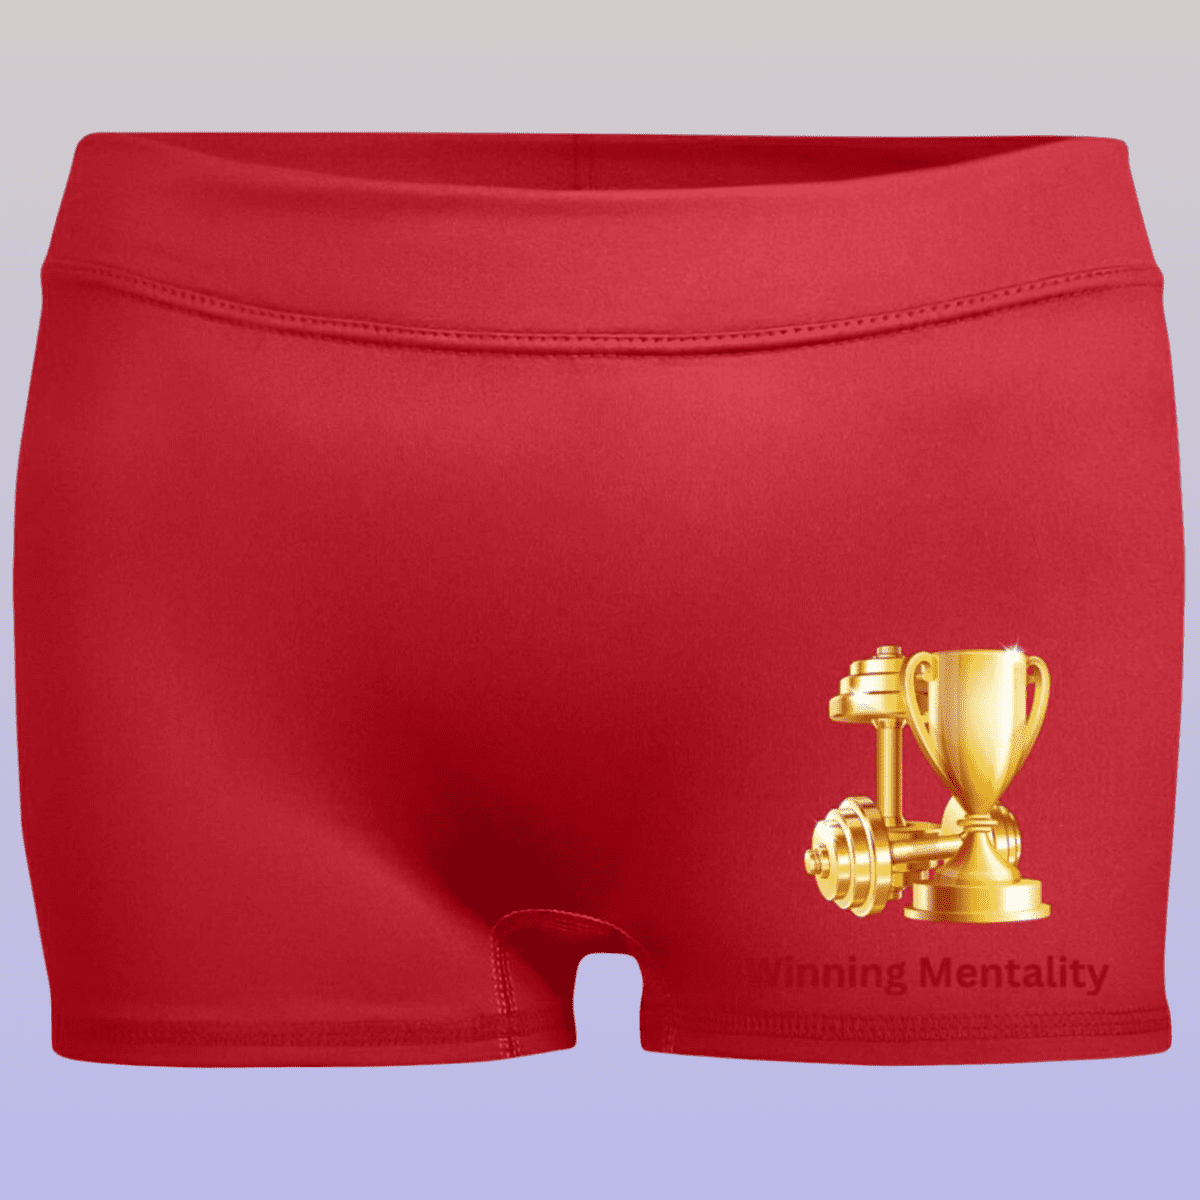 Women's Red Winning Mentality Moisture-Wicking Shorts